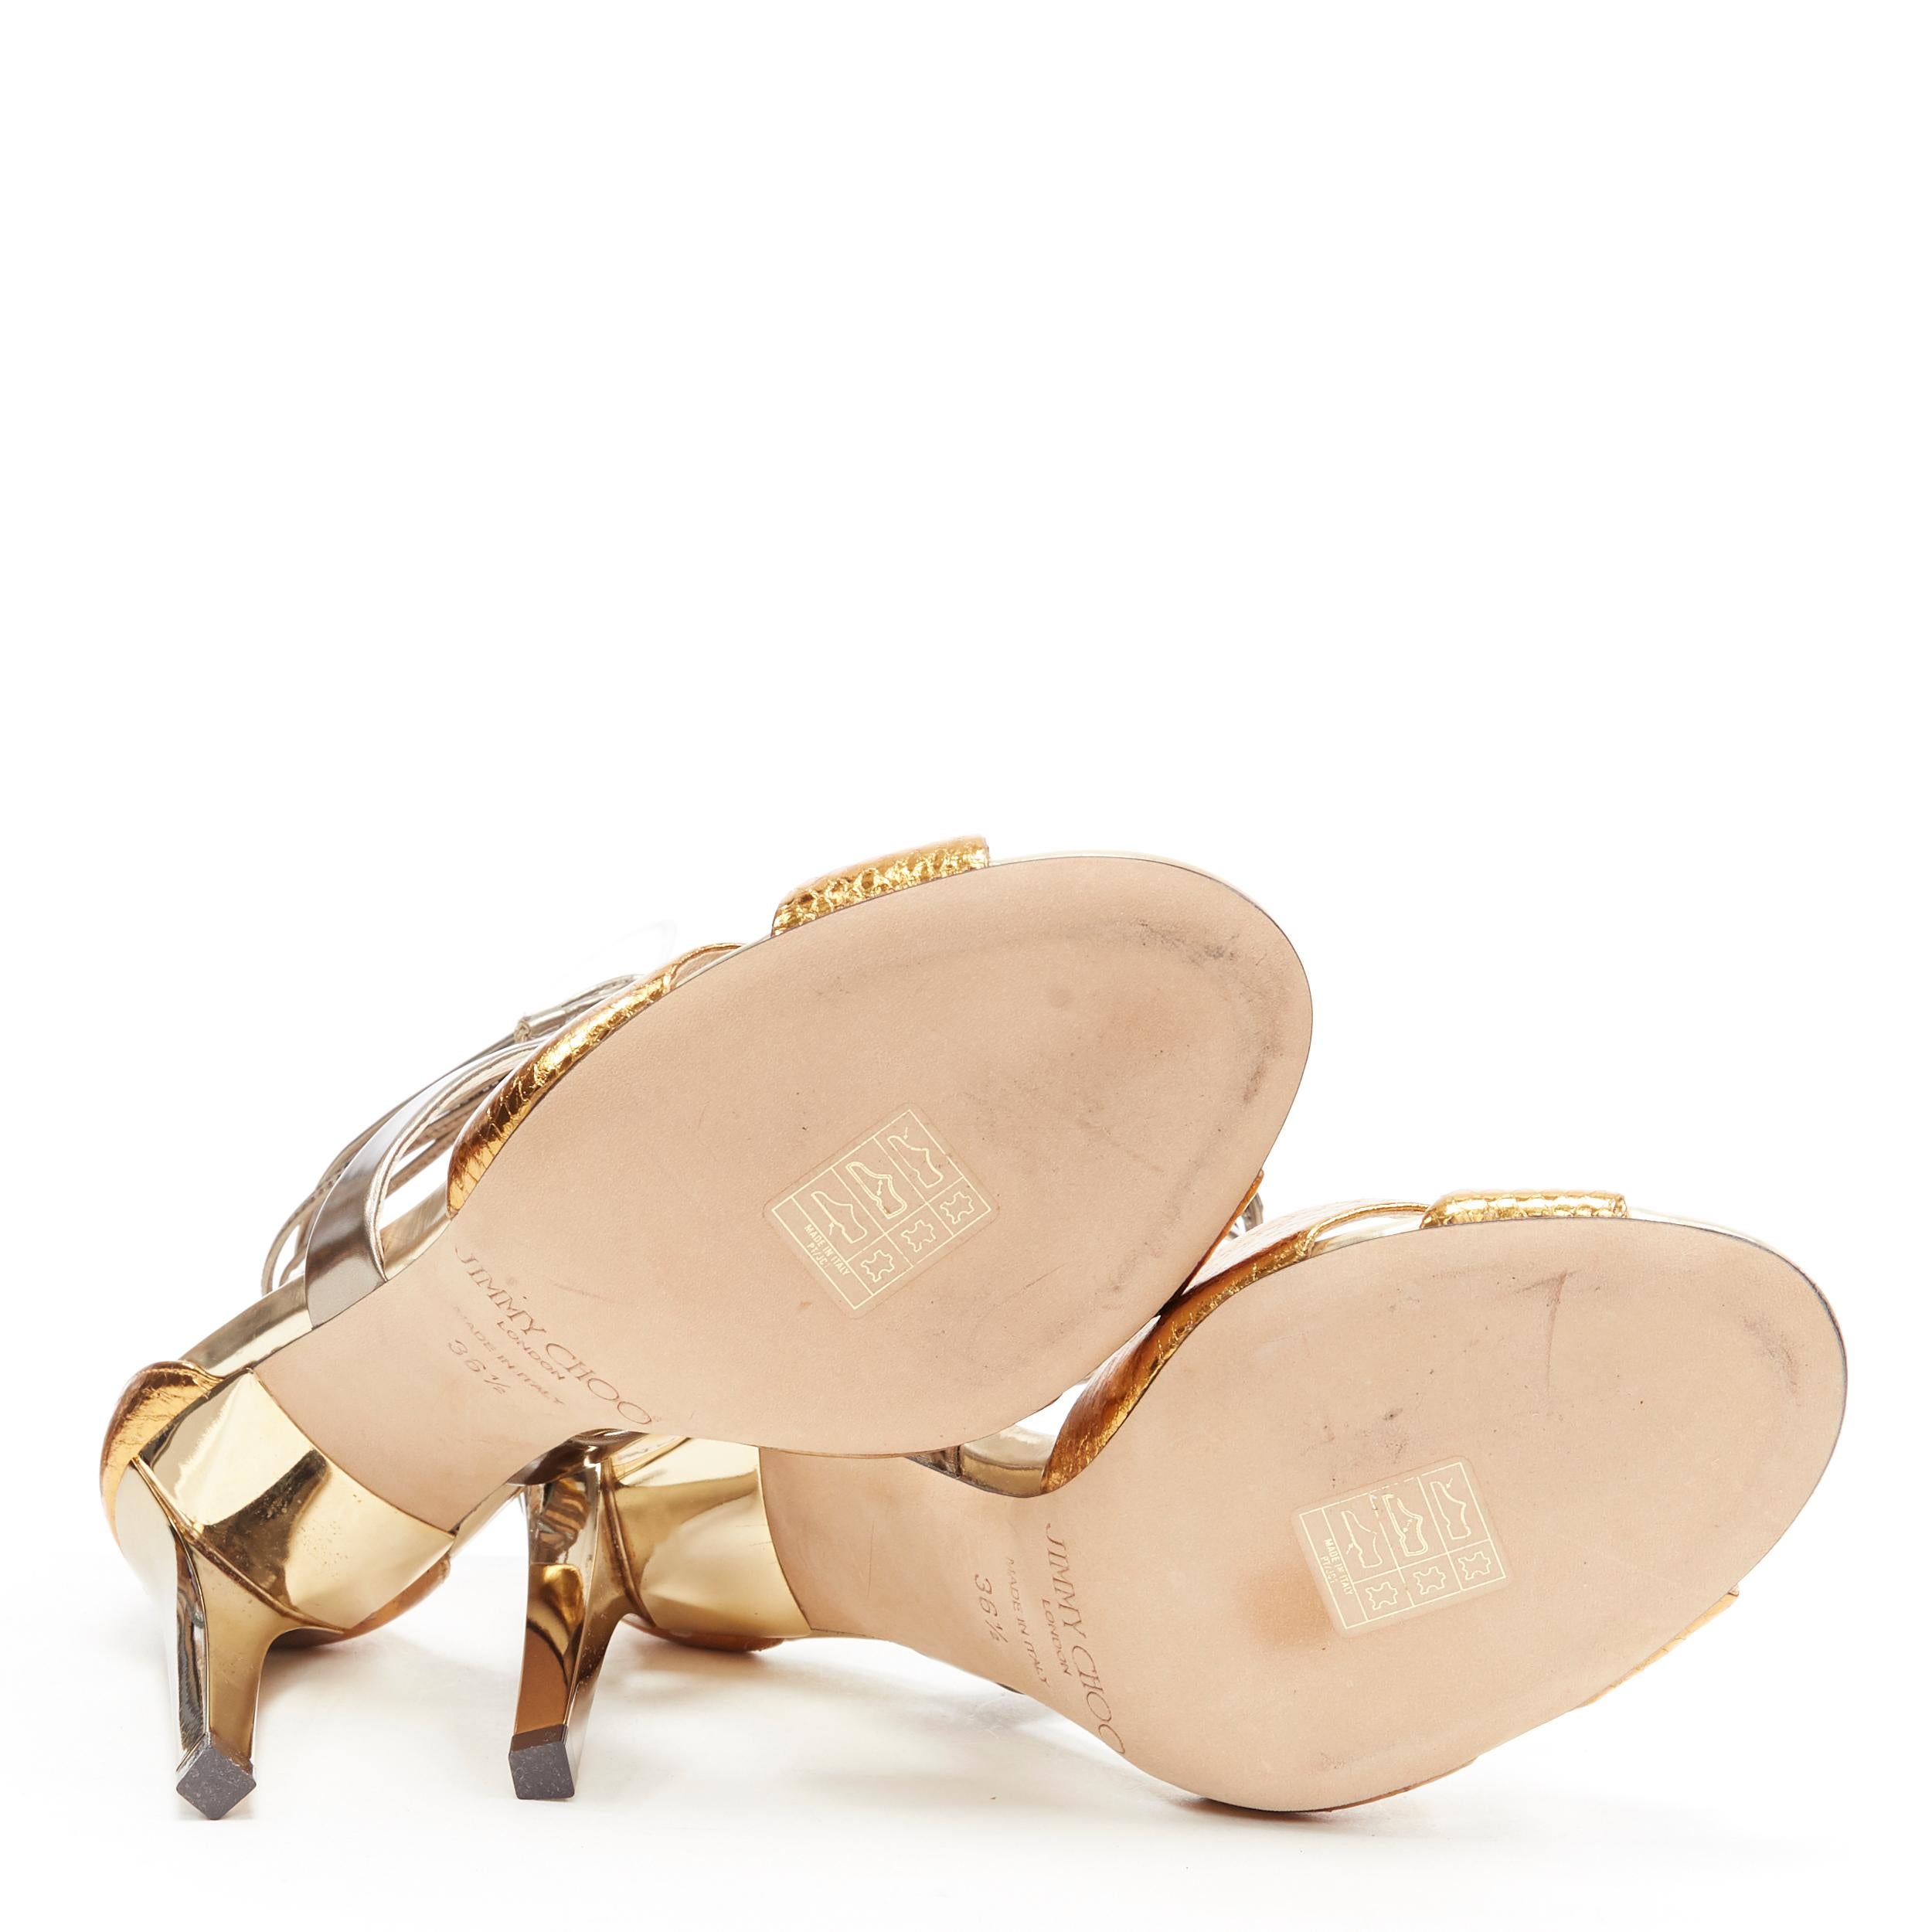 Gold JIMMY CHOO metallic gold wrap around ankle strappy high heel sandals EU36.5